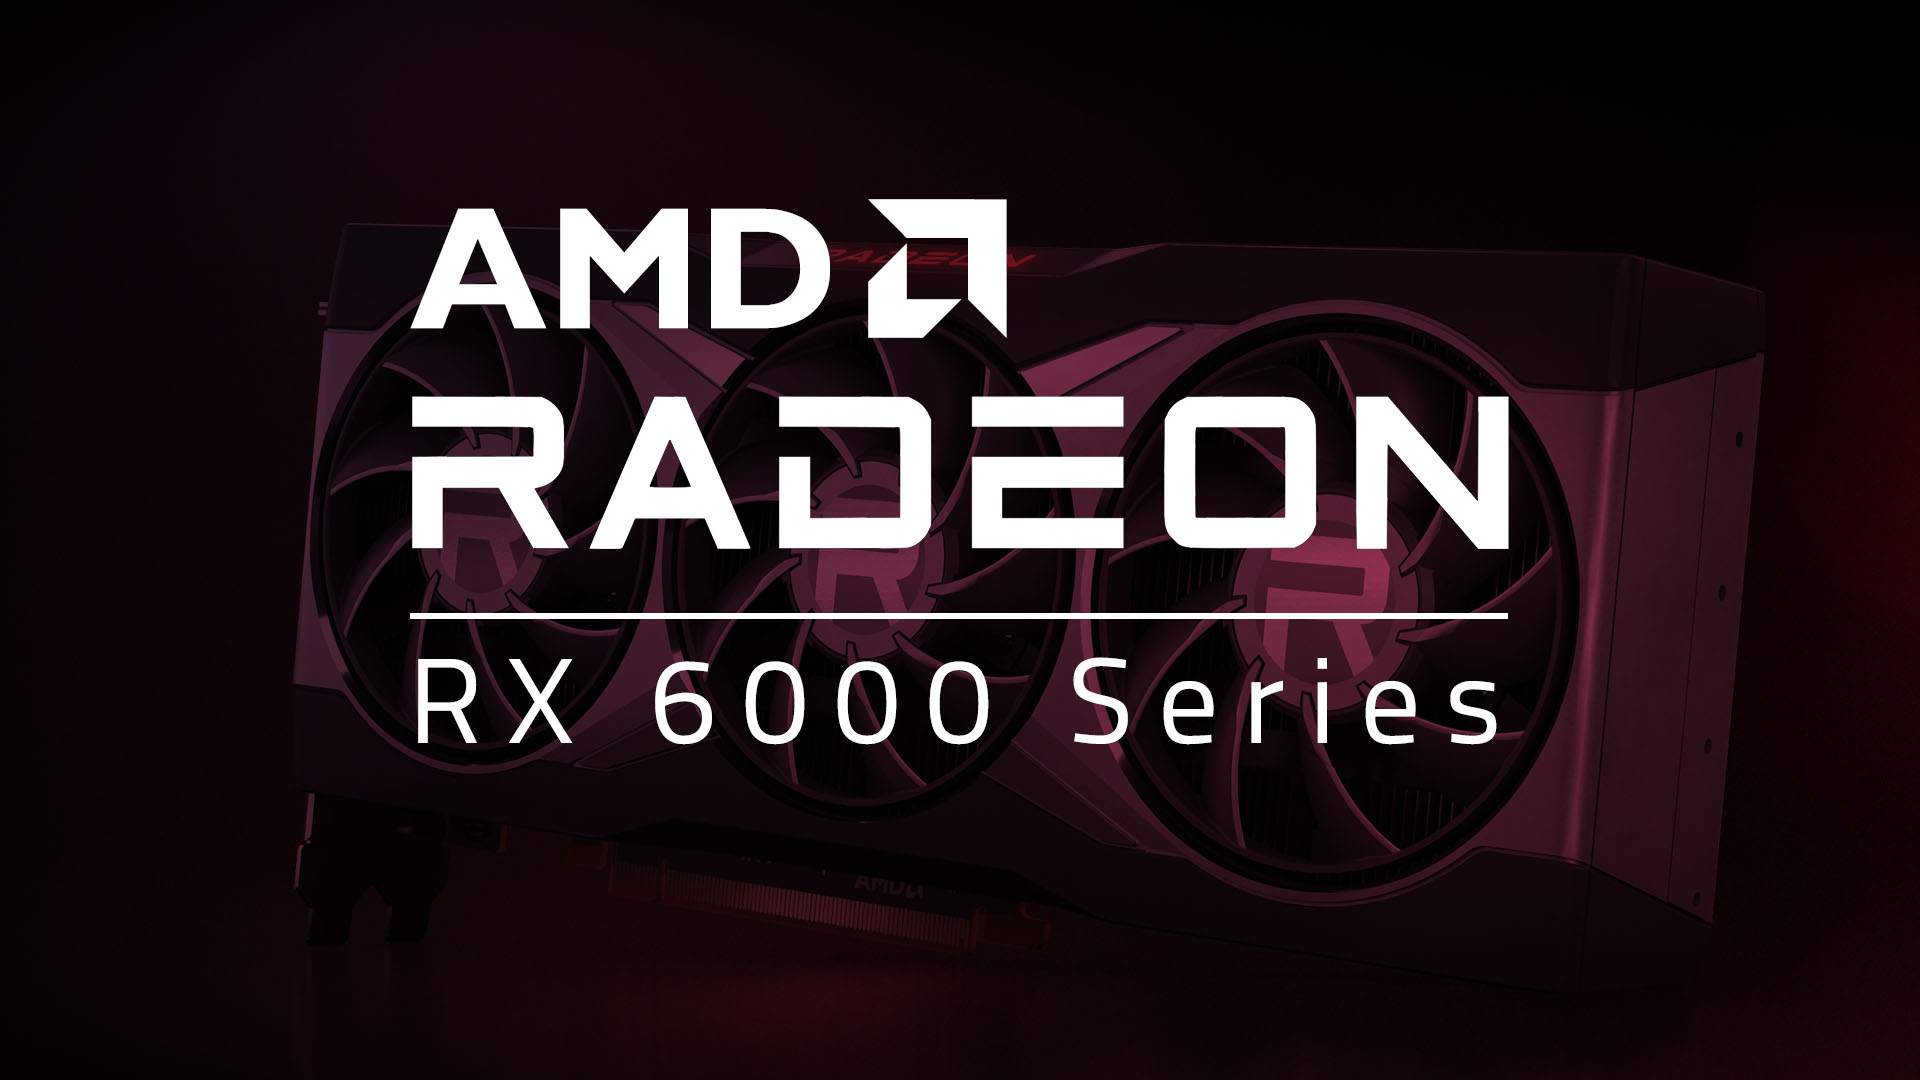 AMDがRadeon RX 6000シリーズのリファレンスモデルの供給を約束。